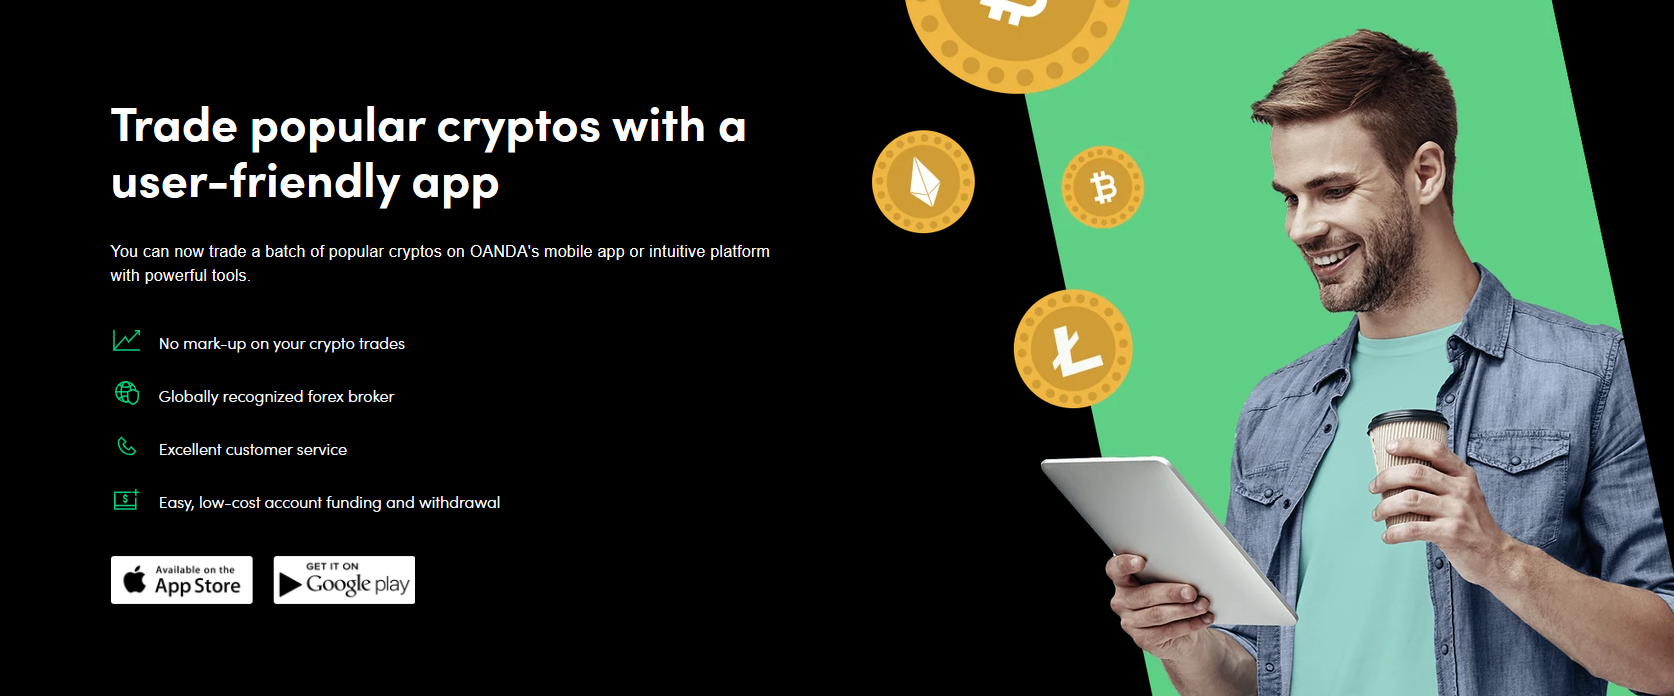 oanda cryptocurrency trading platform